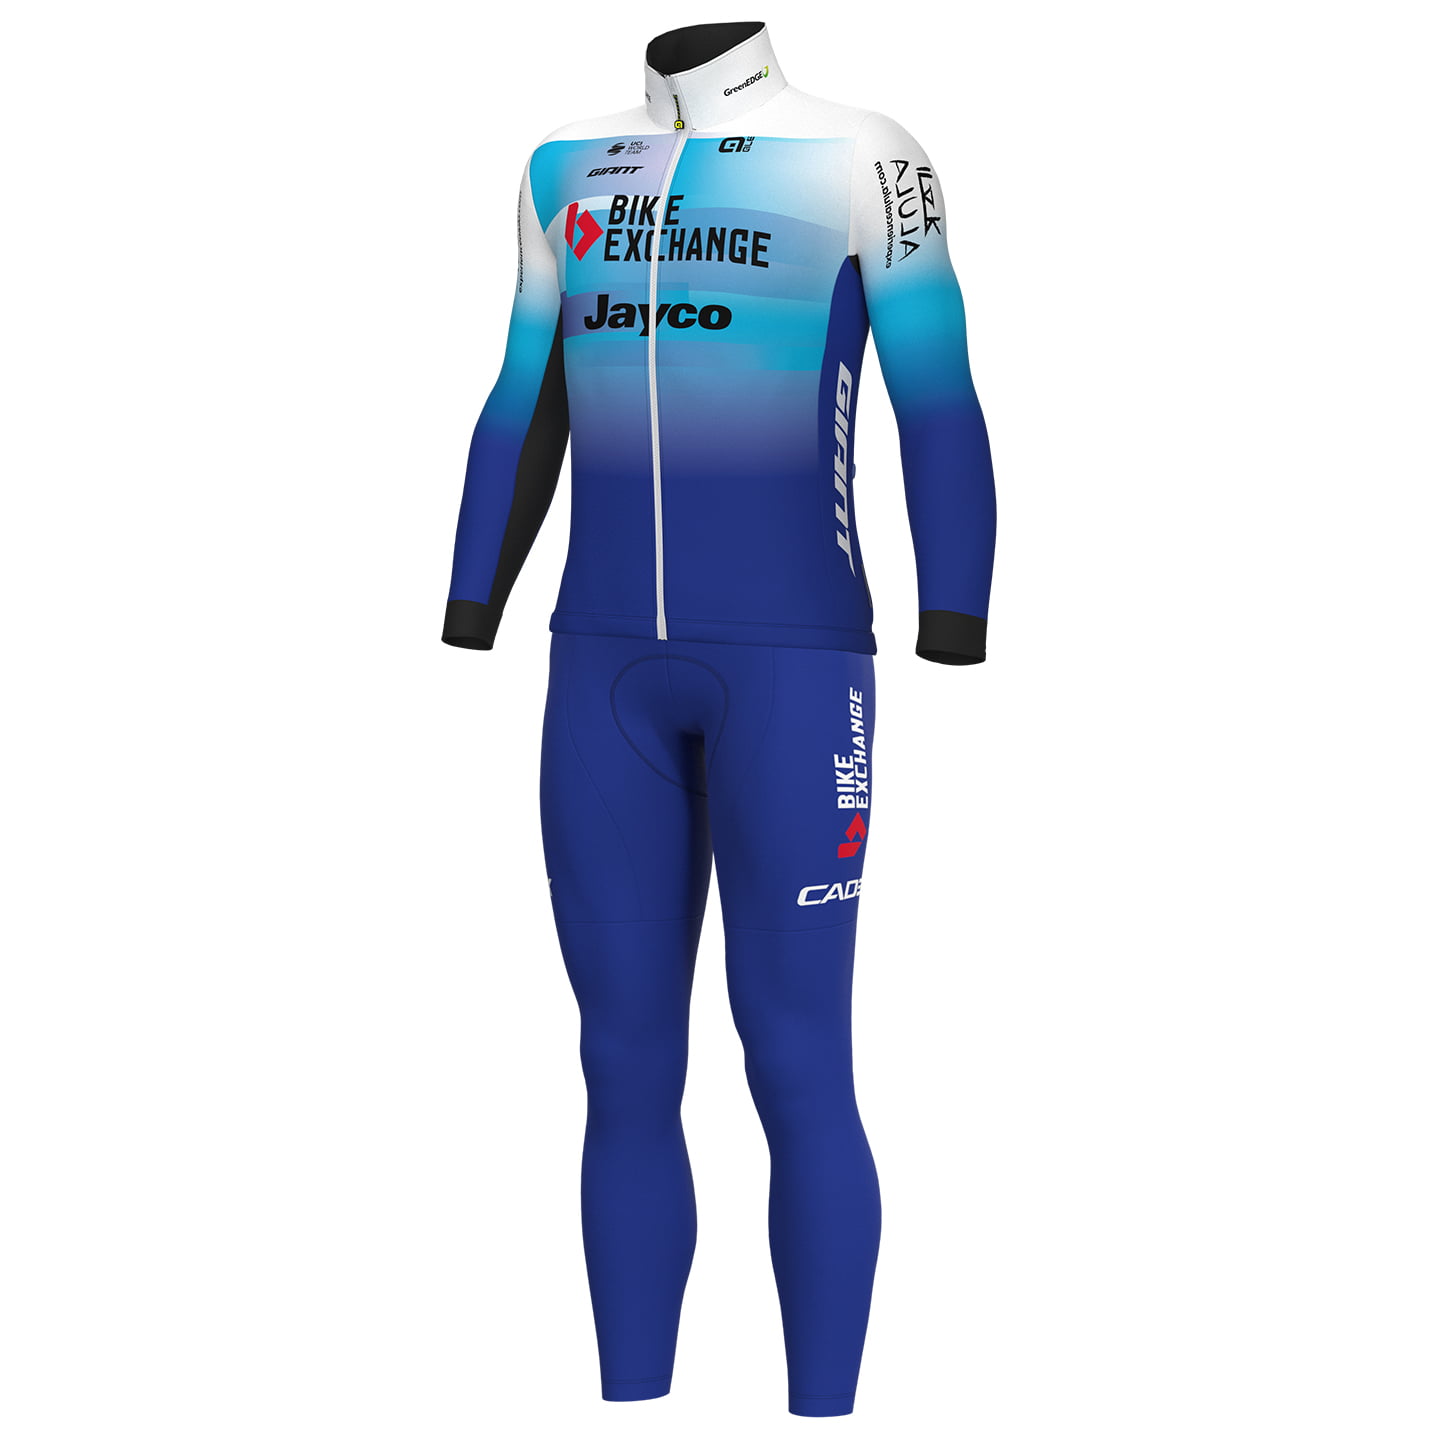 TEAM BIKEEXCHANGE-JAYCO 2022 Set (winter jacket + cycling tights) Set (2 pieces), for men